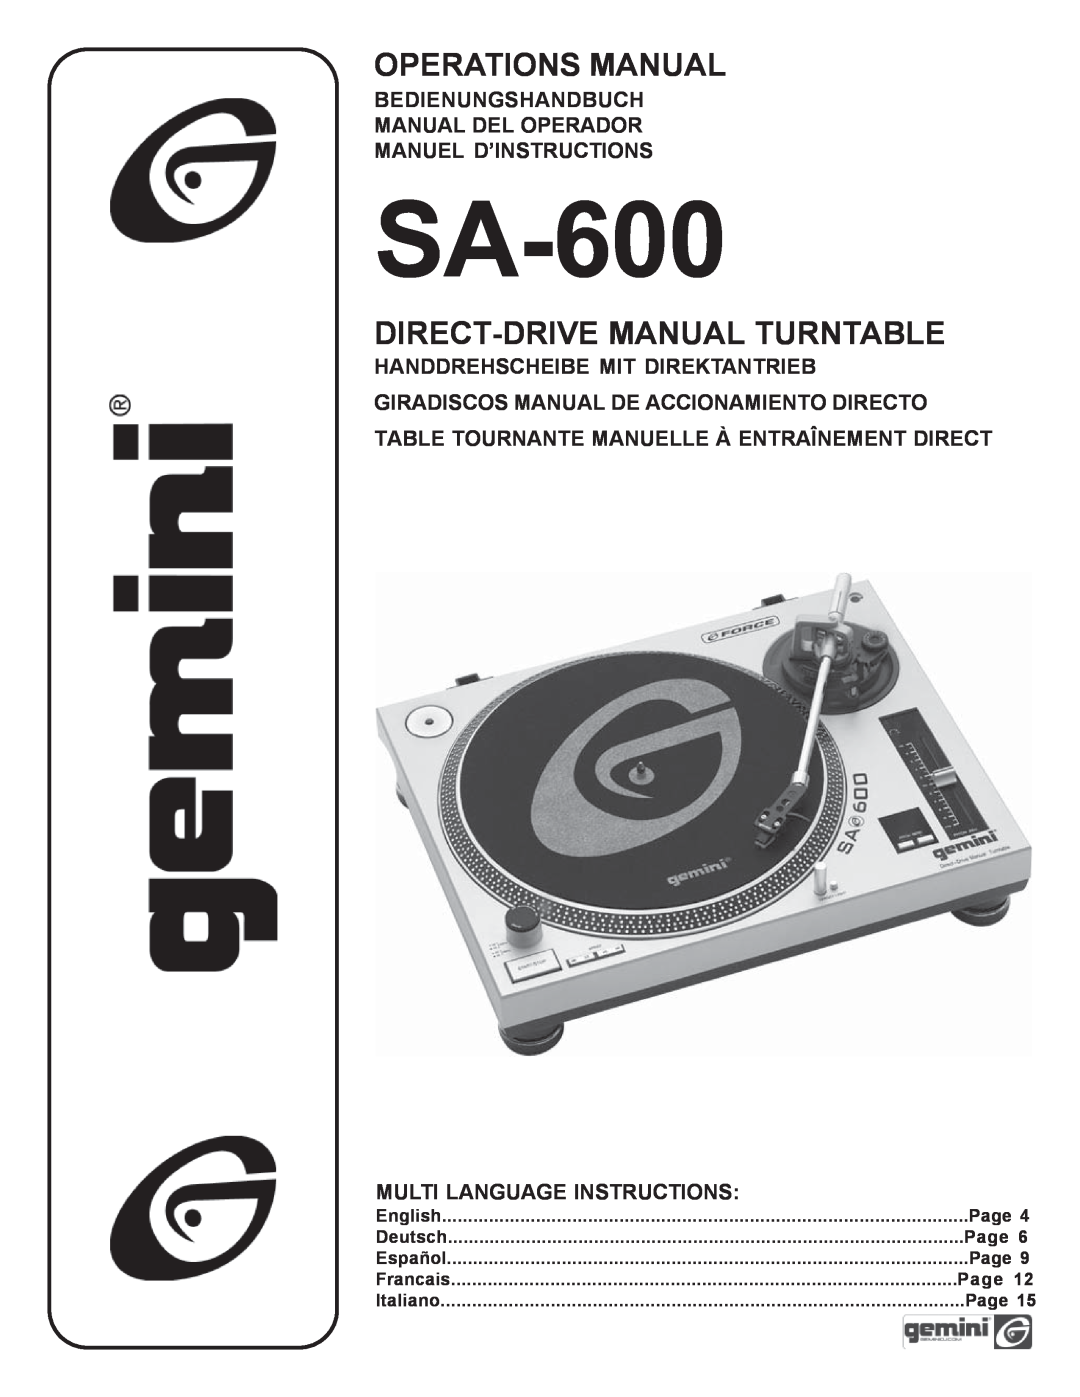 Gemini SA-600 manual Bedienungshandbuch Manual Del Operador, Manuel D’Instructions, Multi Language Instructions, English 